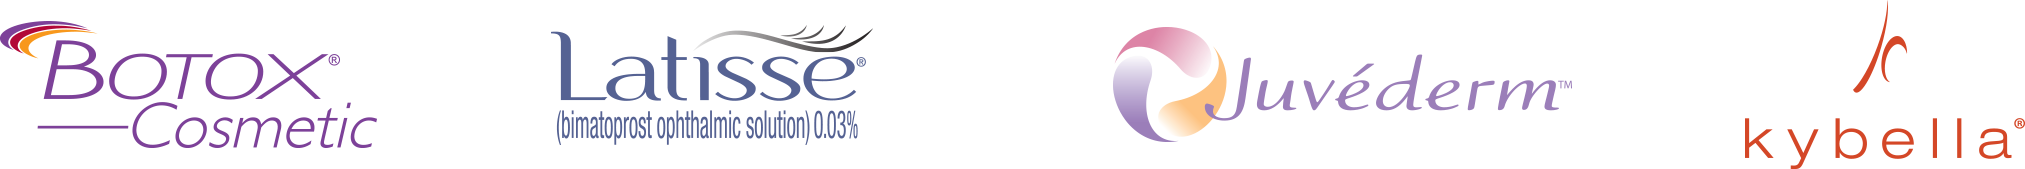 Botox Cosmetic, Latisse, Juvéderm, and Kybella logo's